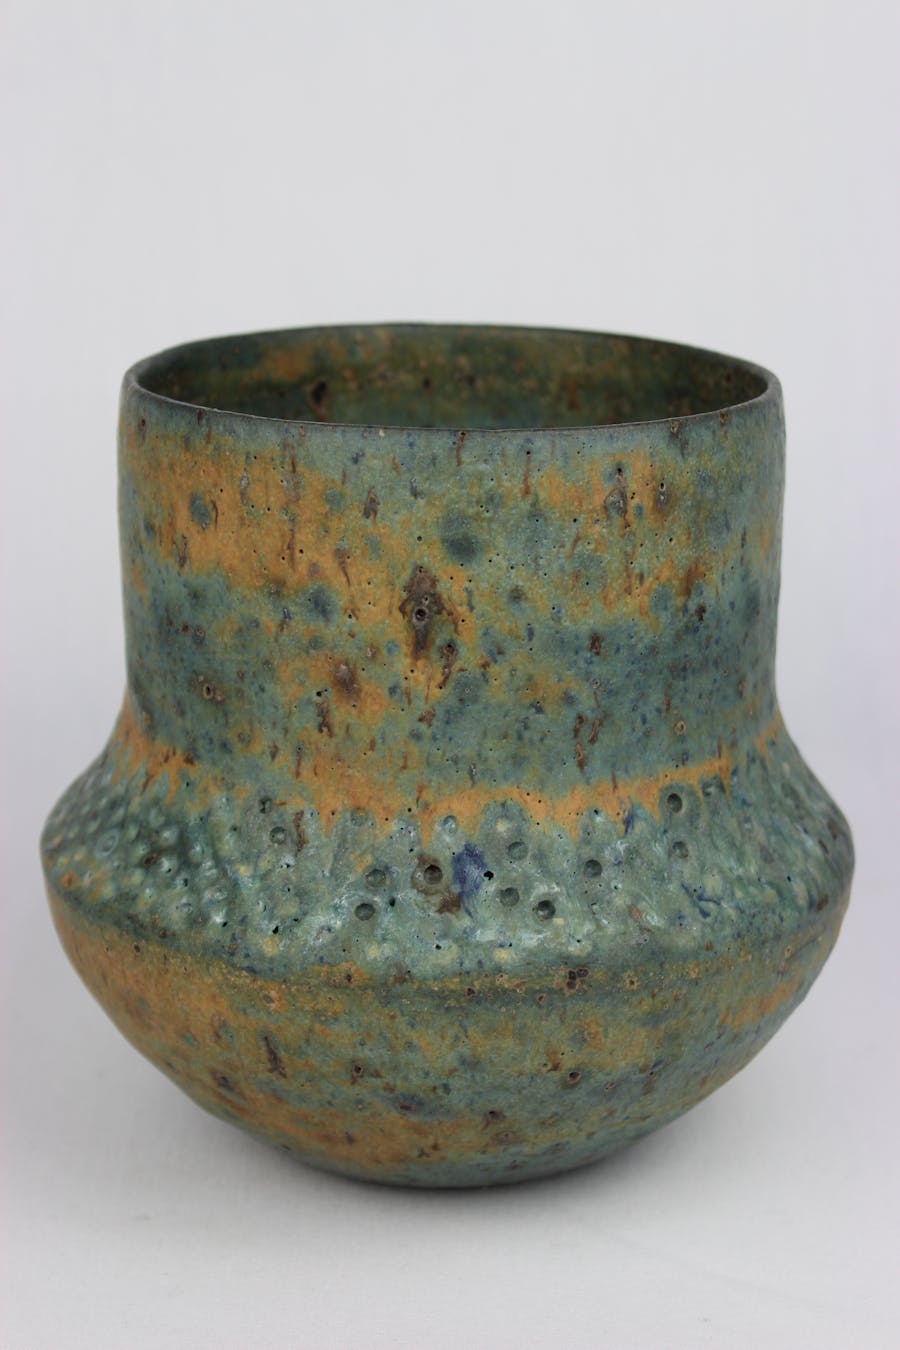  Lucy Rie (1902-1995), ‘Thrown Vase’, 1971, glazed ceramic, 13 cm. diameter. Image via Wikimedia